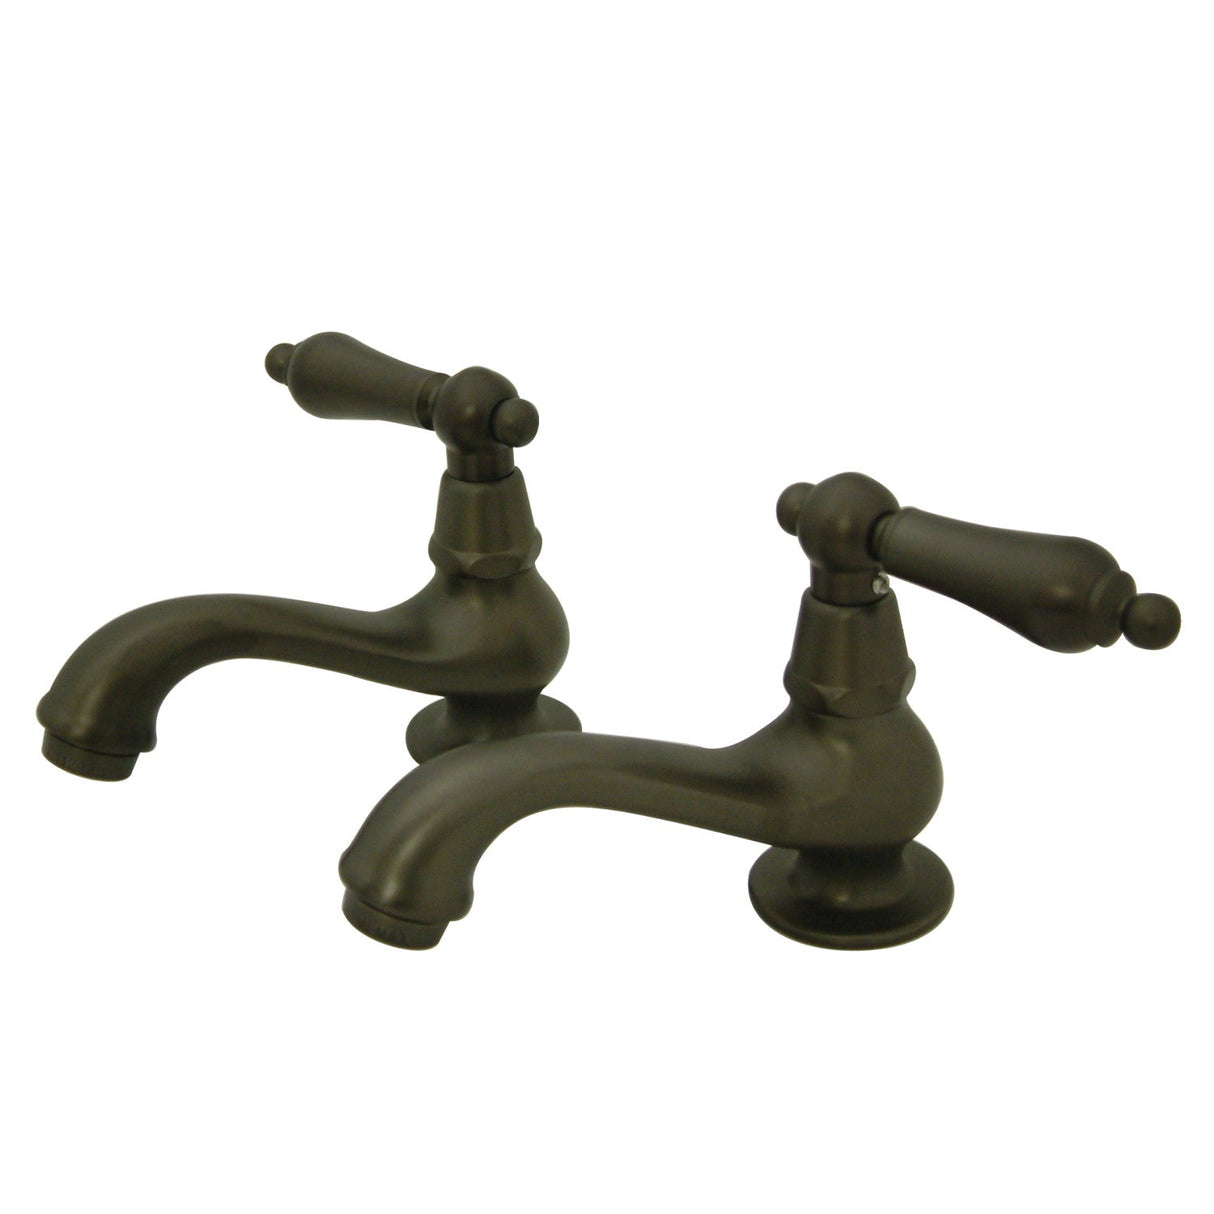 Heritage KS1105AL Two-Handle Deck Mount Basin Tap Faucet, Oil Rubbed Bronze